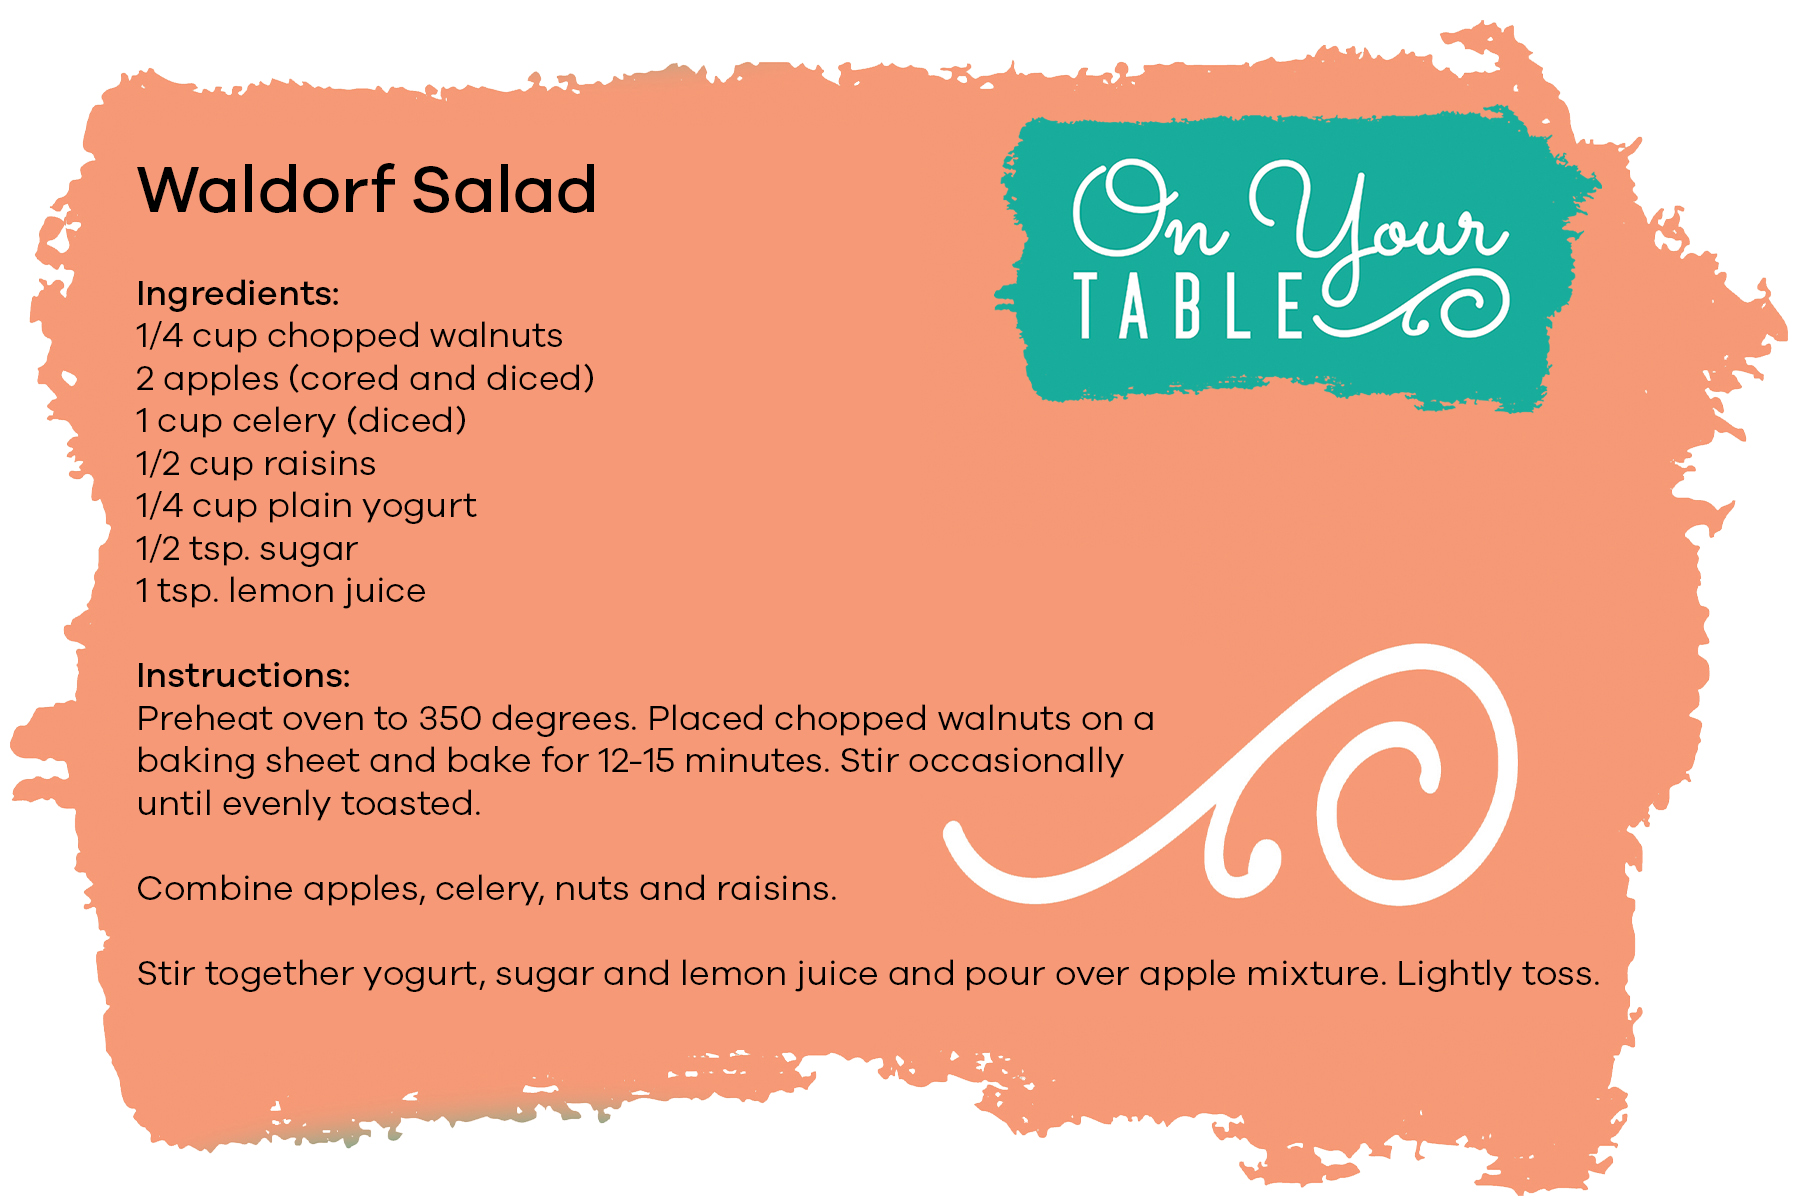 Waldorf Salad recipe card